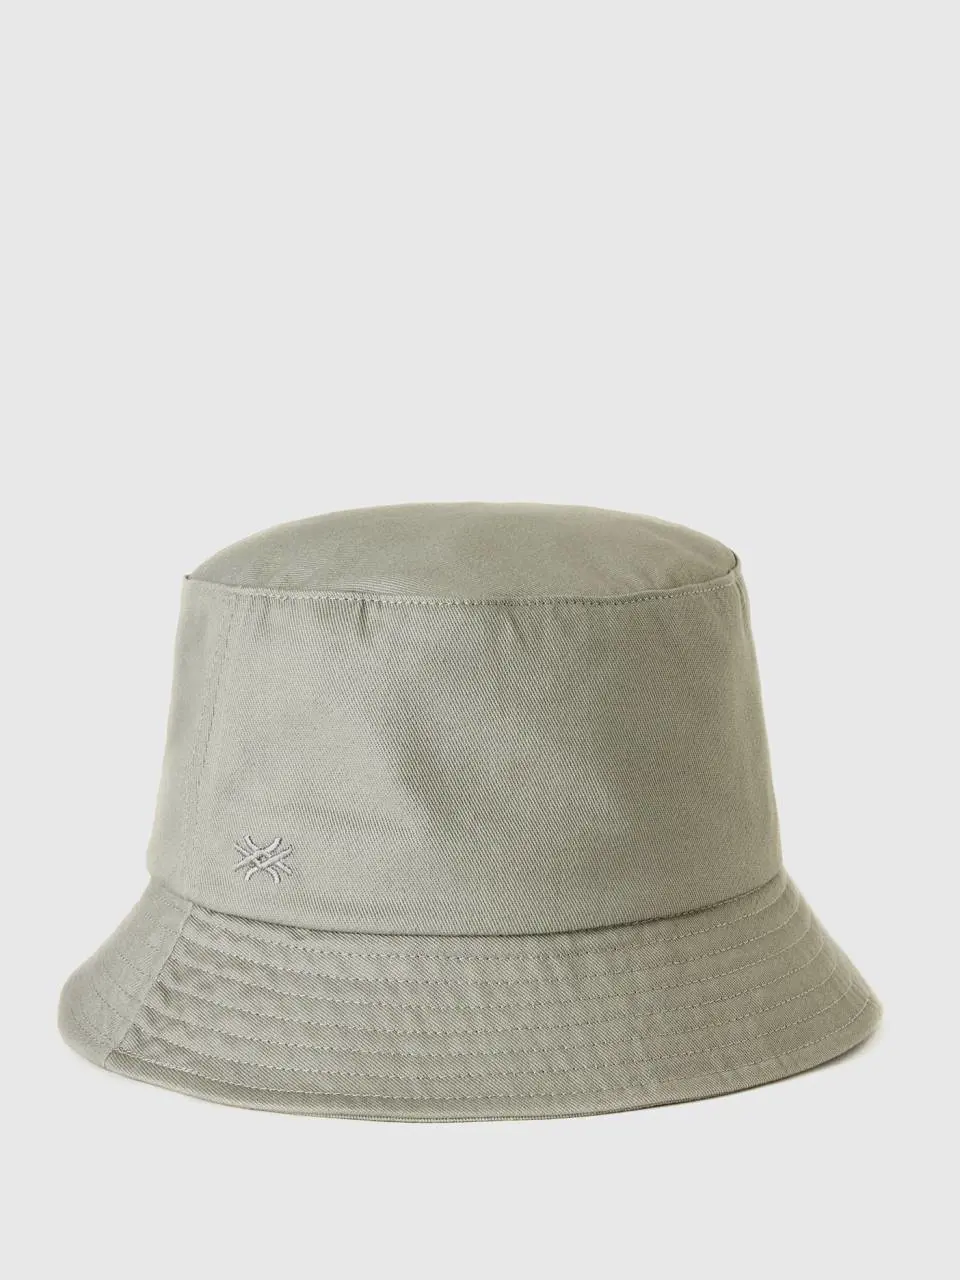 Benetton gray fisherman's hat with logo. 1